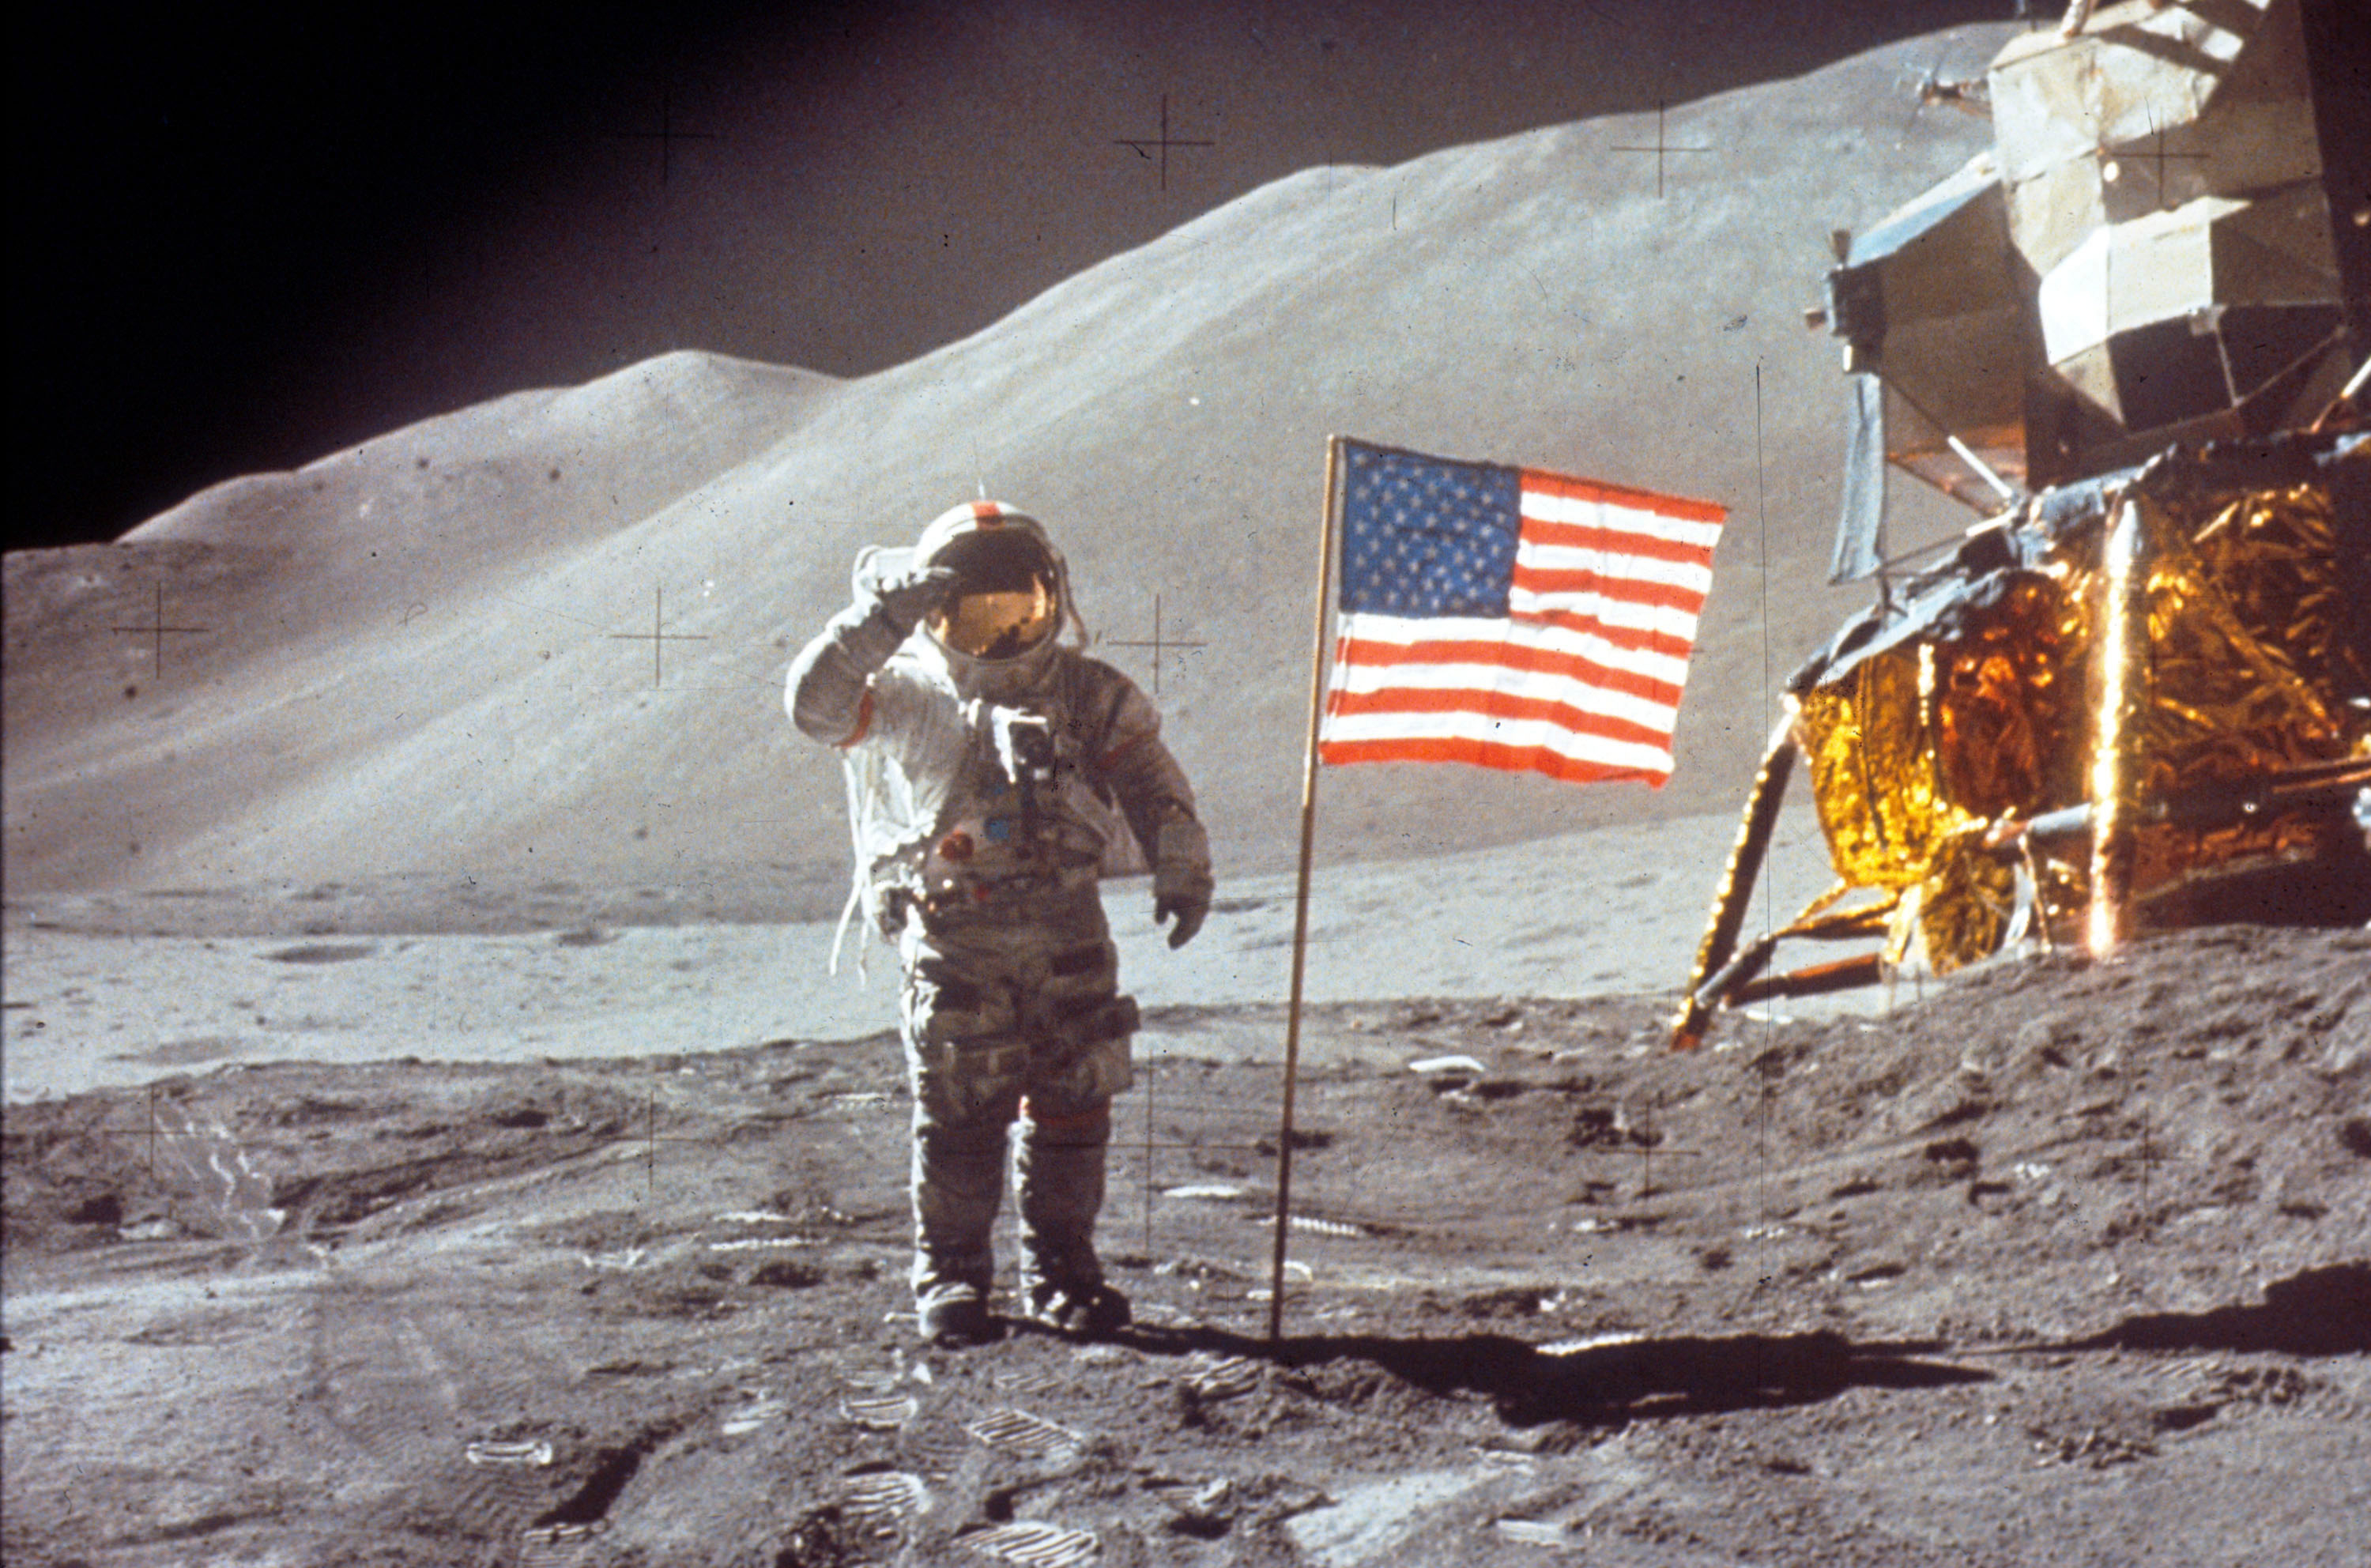 The moon landing footage